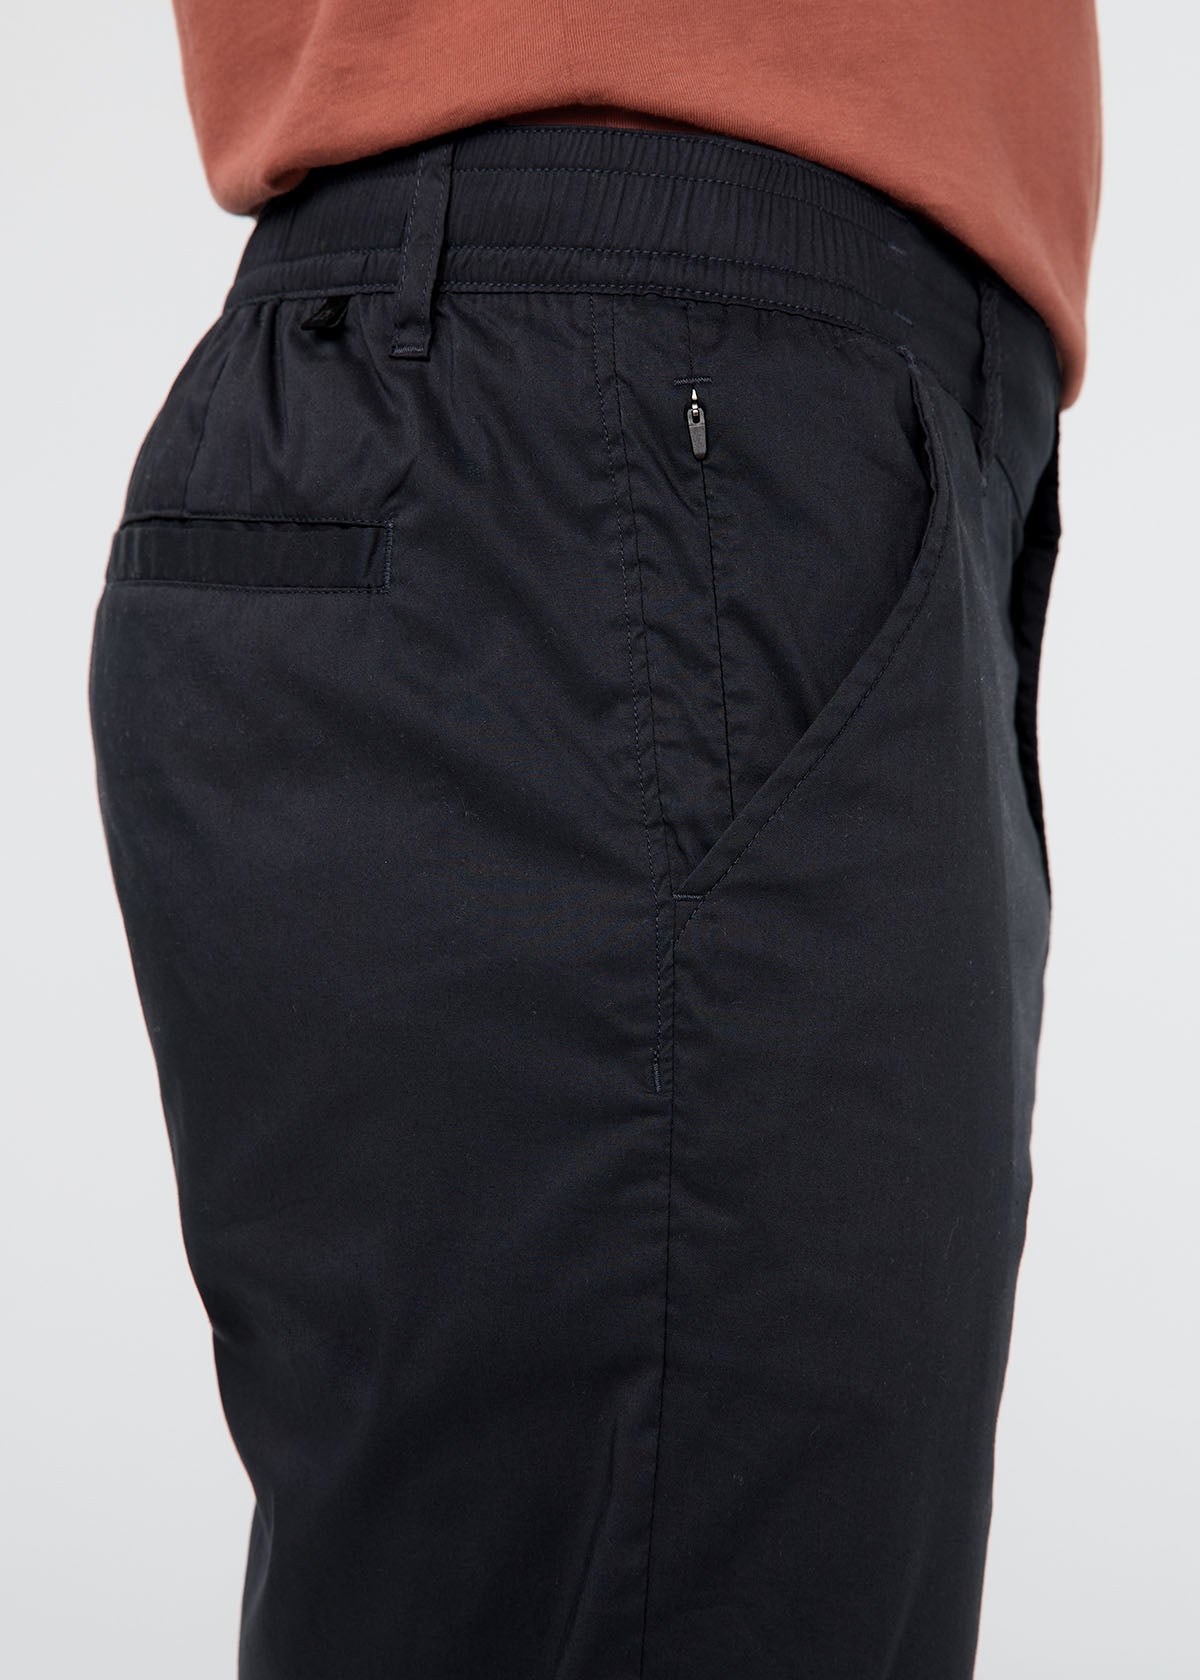 mens black lightweight summer travel pants side detail